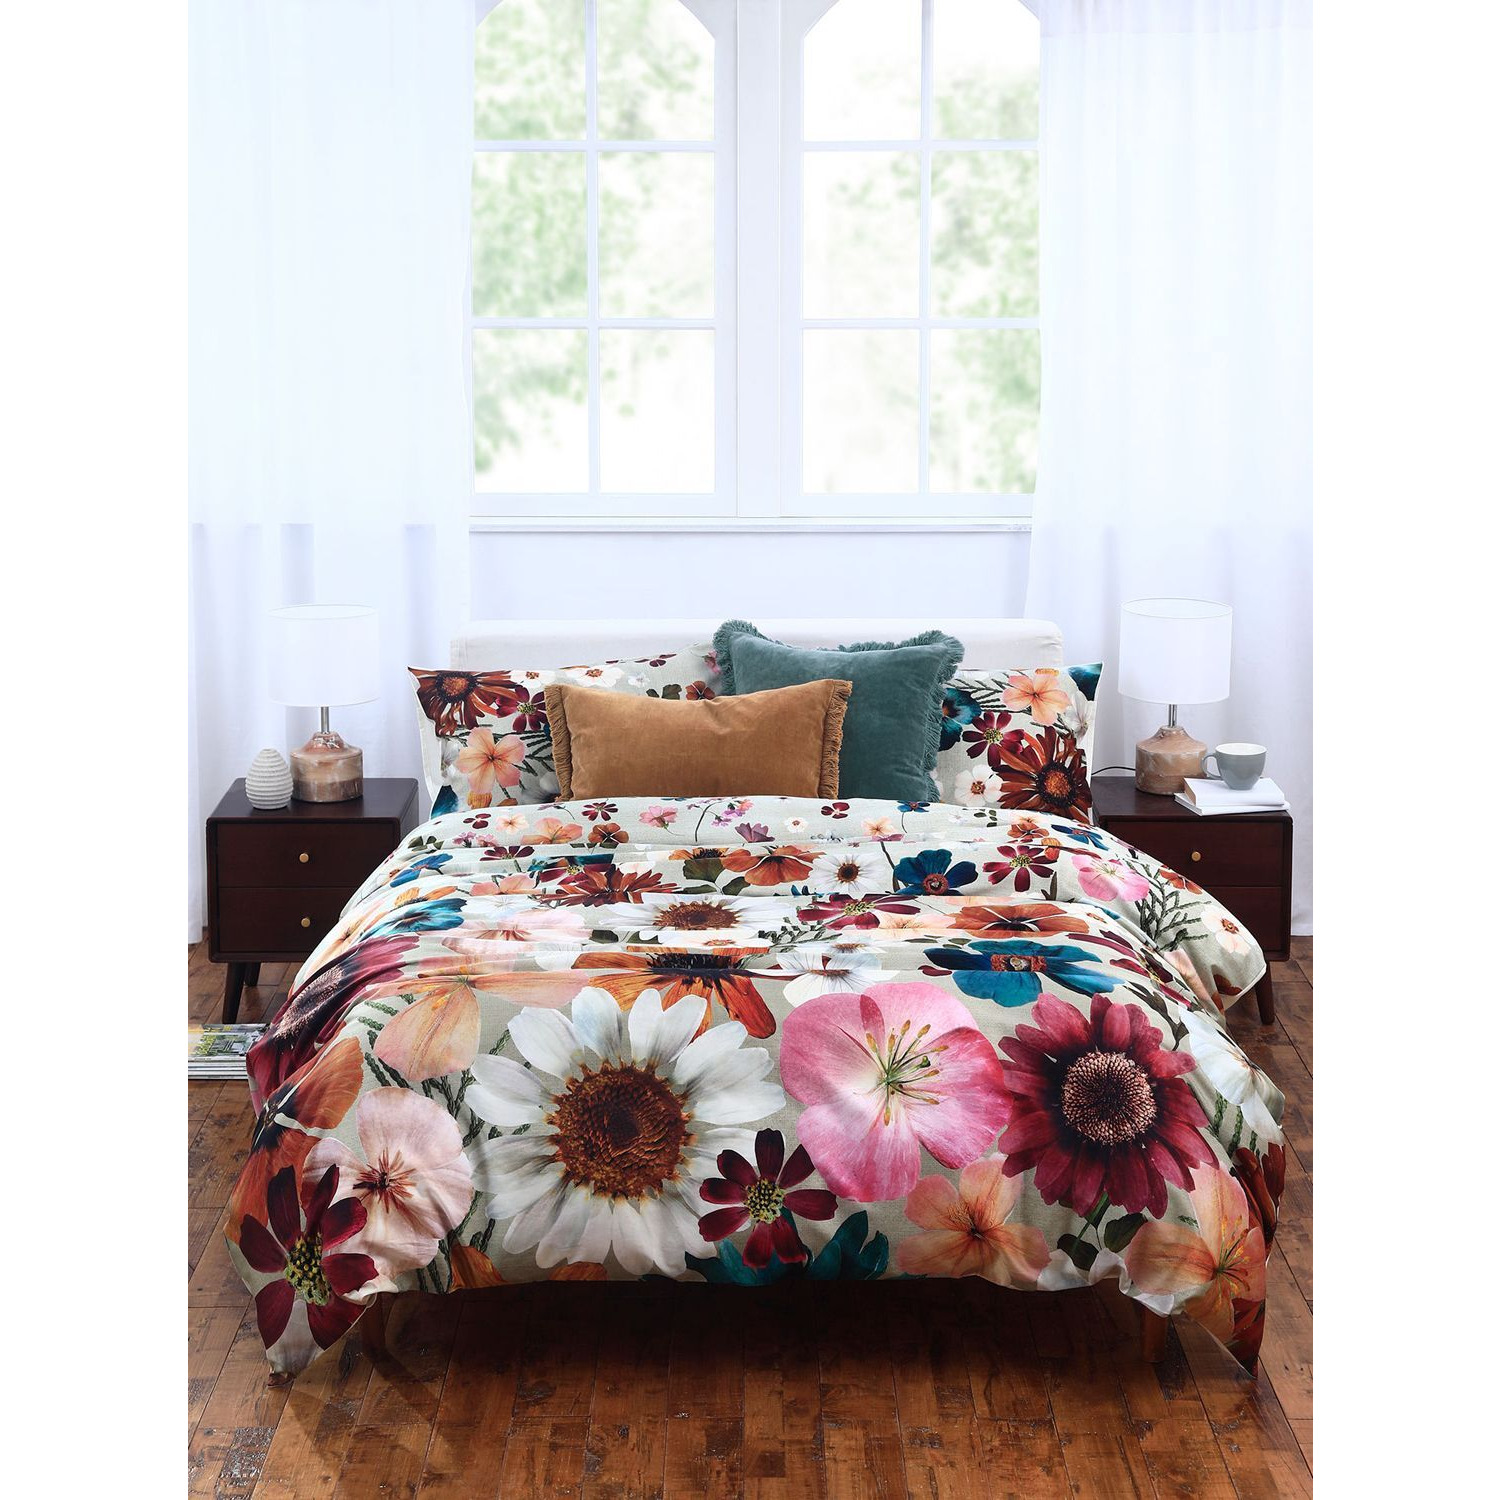 MM Linen Flowerbed Duvet Cover Set - image 1